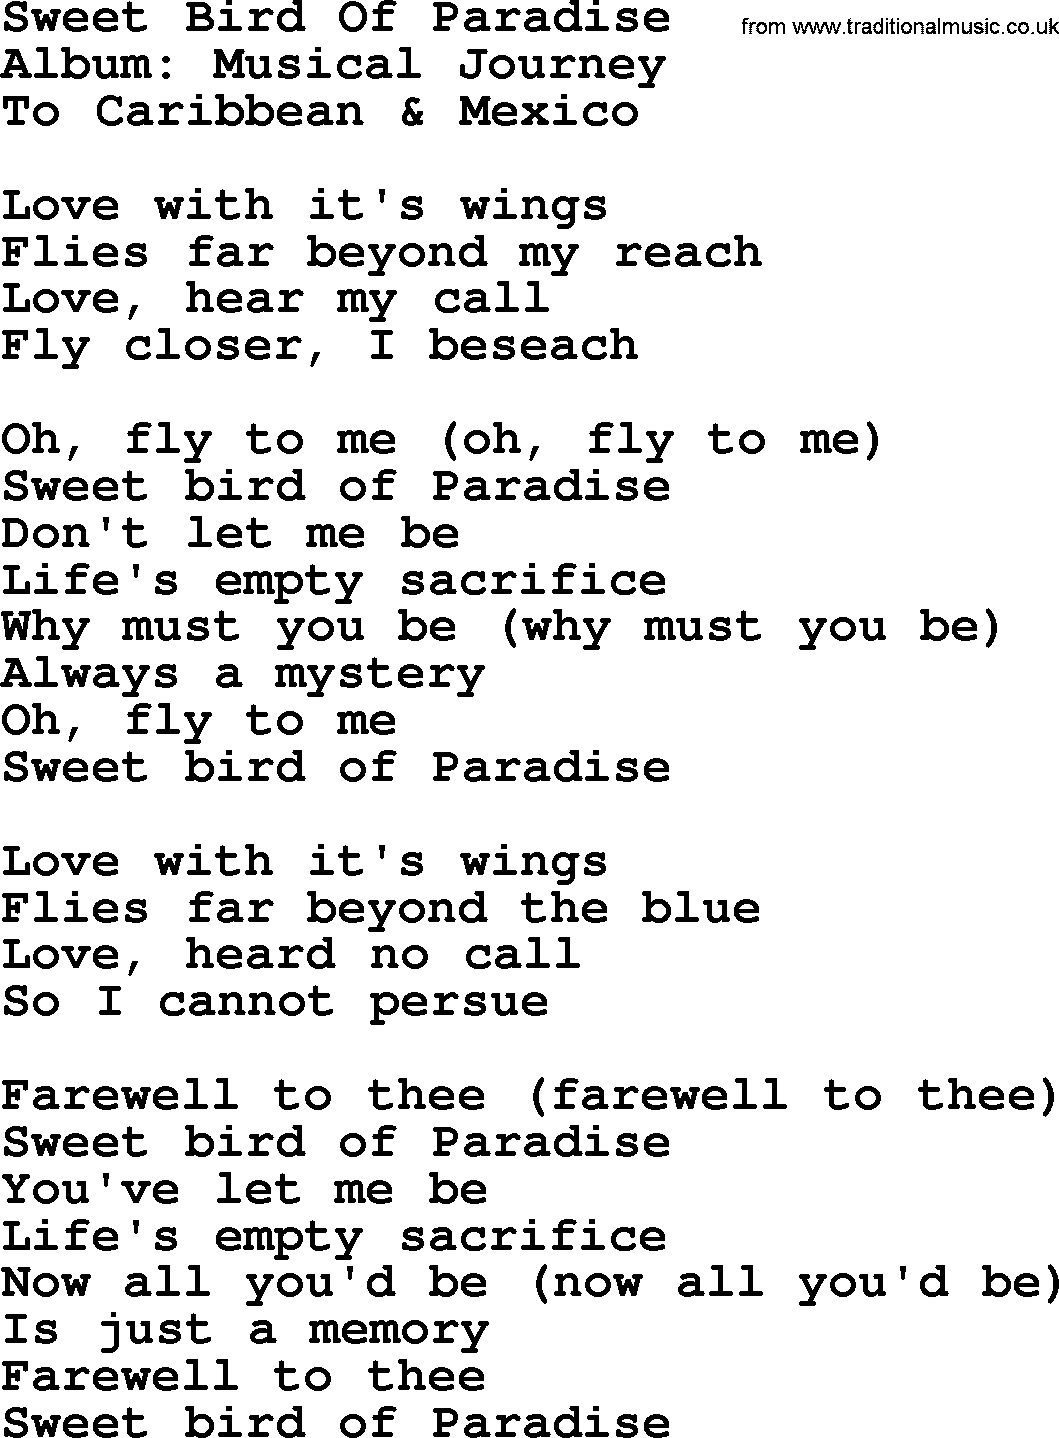 Marty Robbins song: Sweet Bird Of Paradise, lyrics